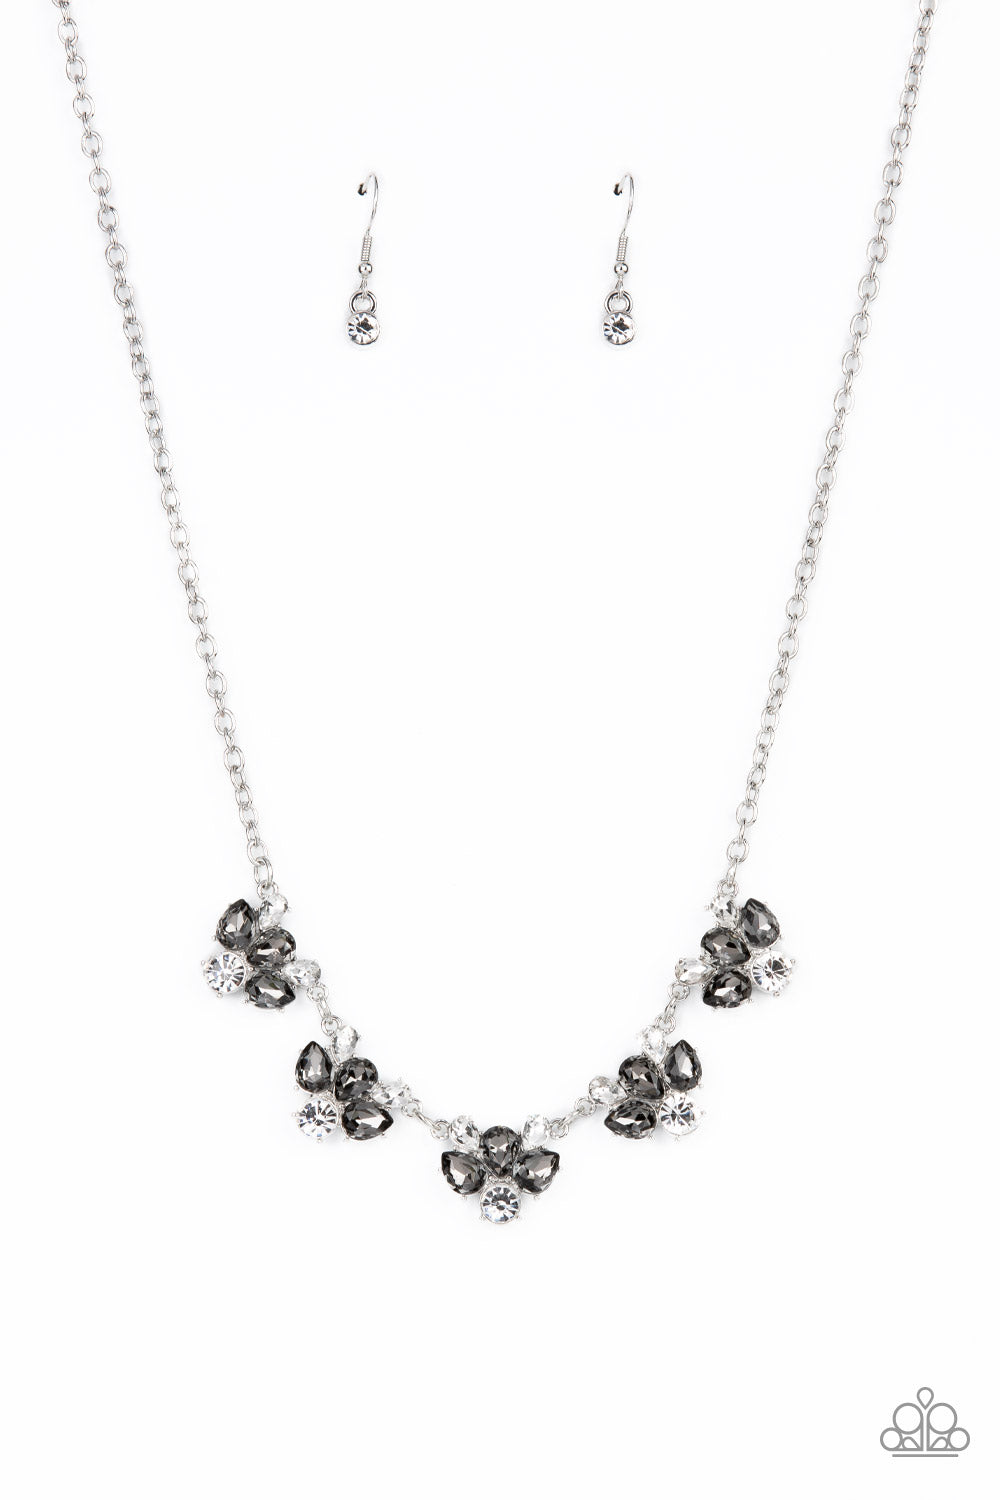 Envious Elegance - Silver Necklace - Paparazzi Accessories